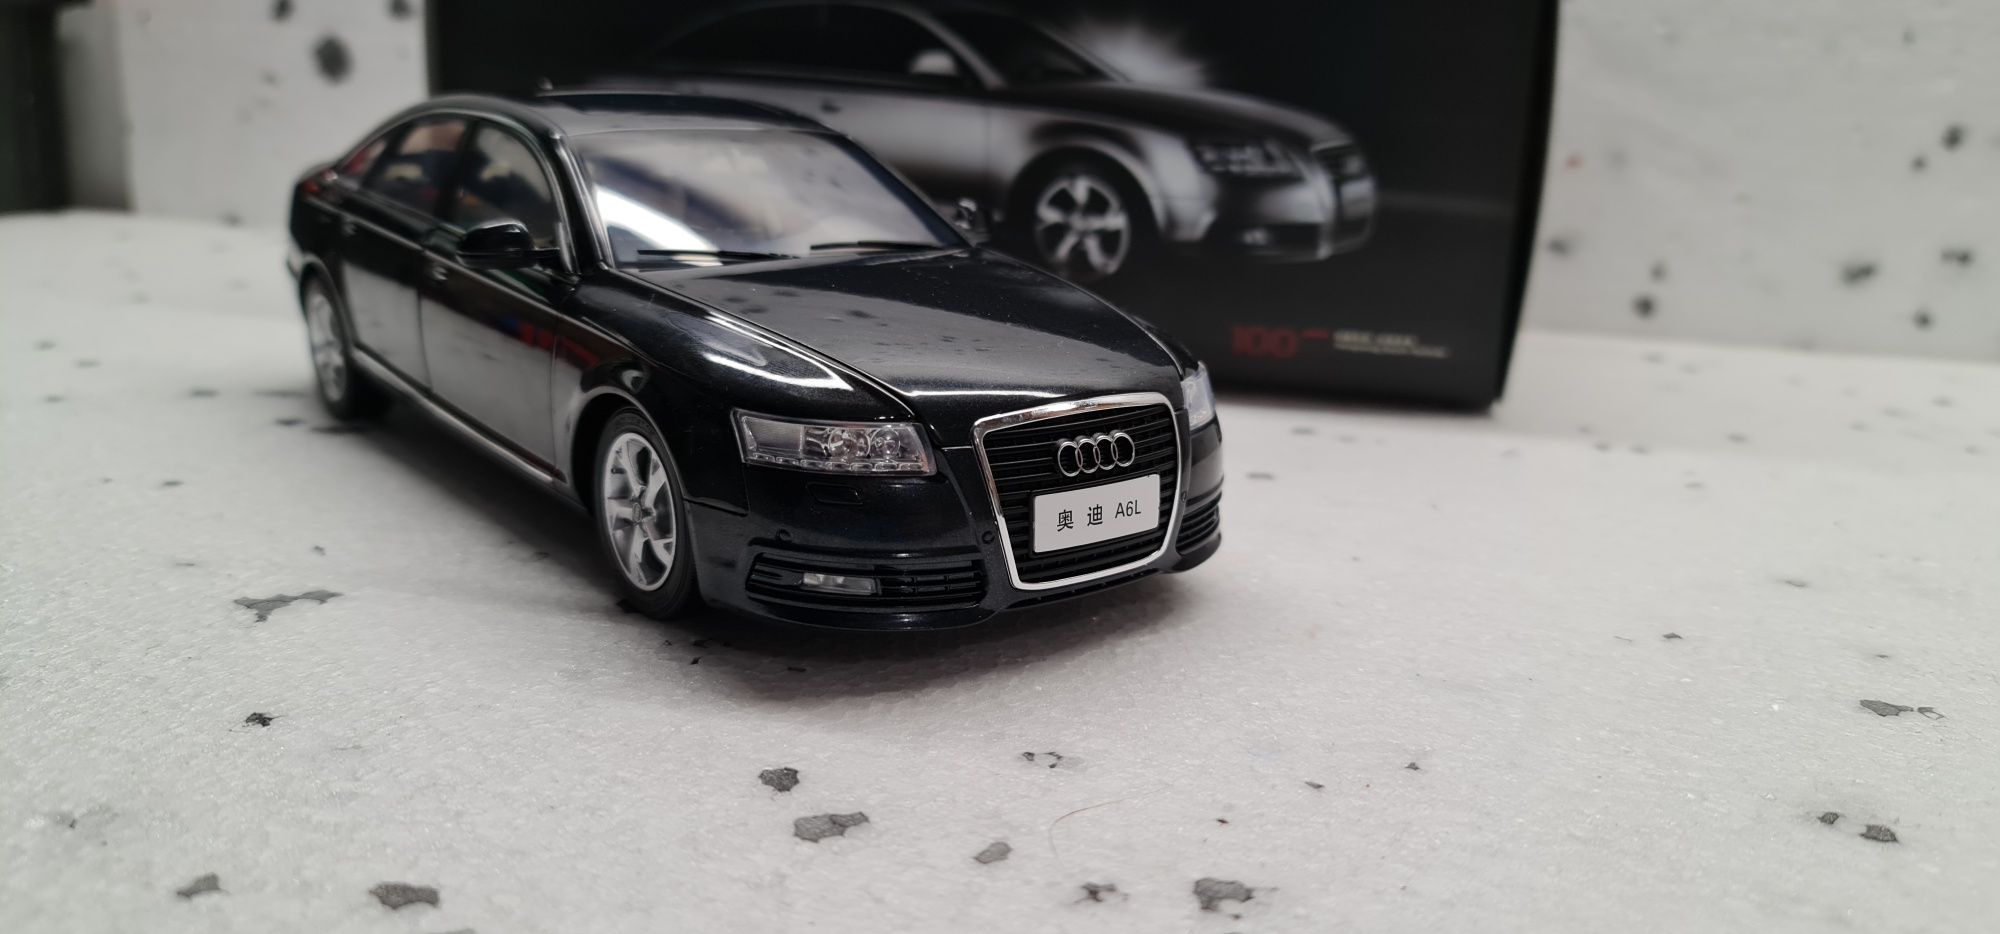 Audi a6 1/18 norev minichamps kyosho Otto skala modele samochodów